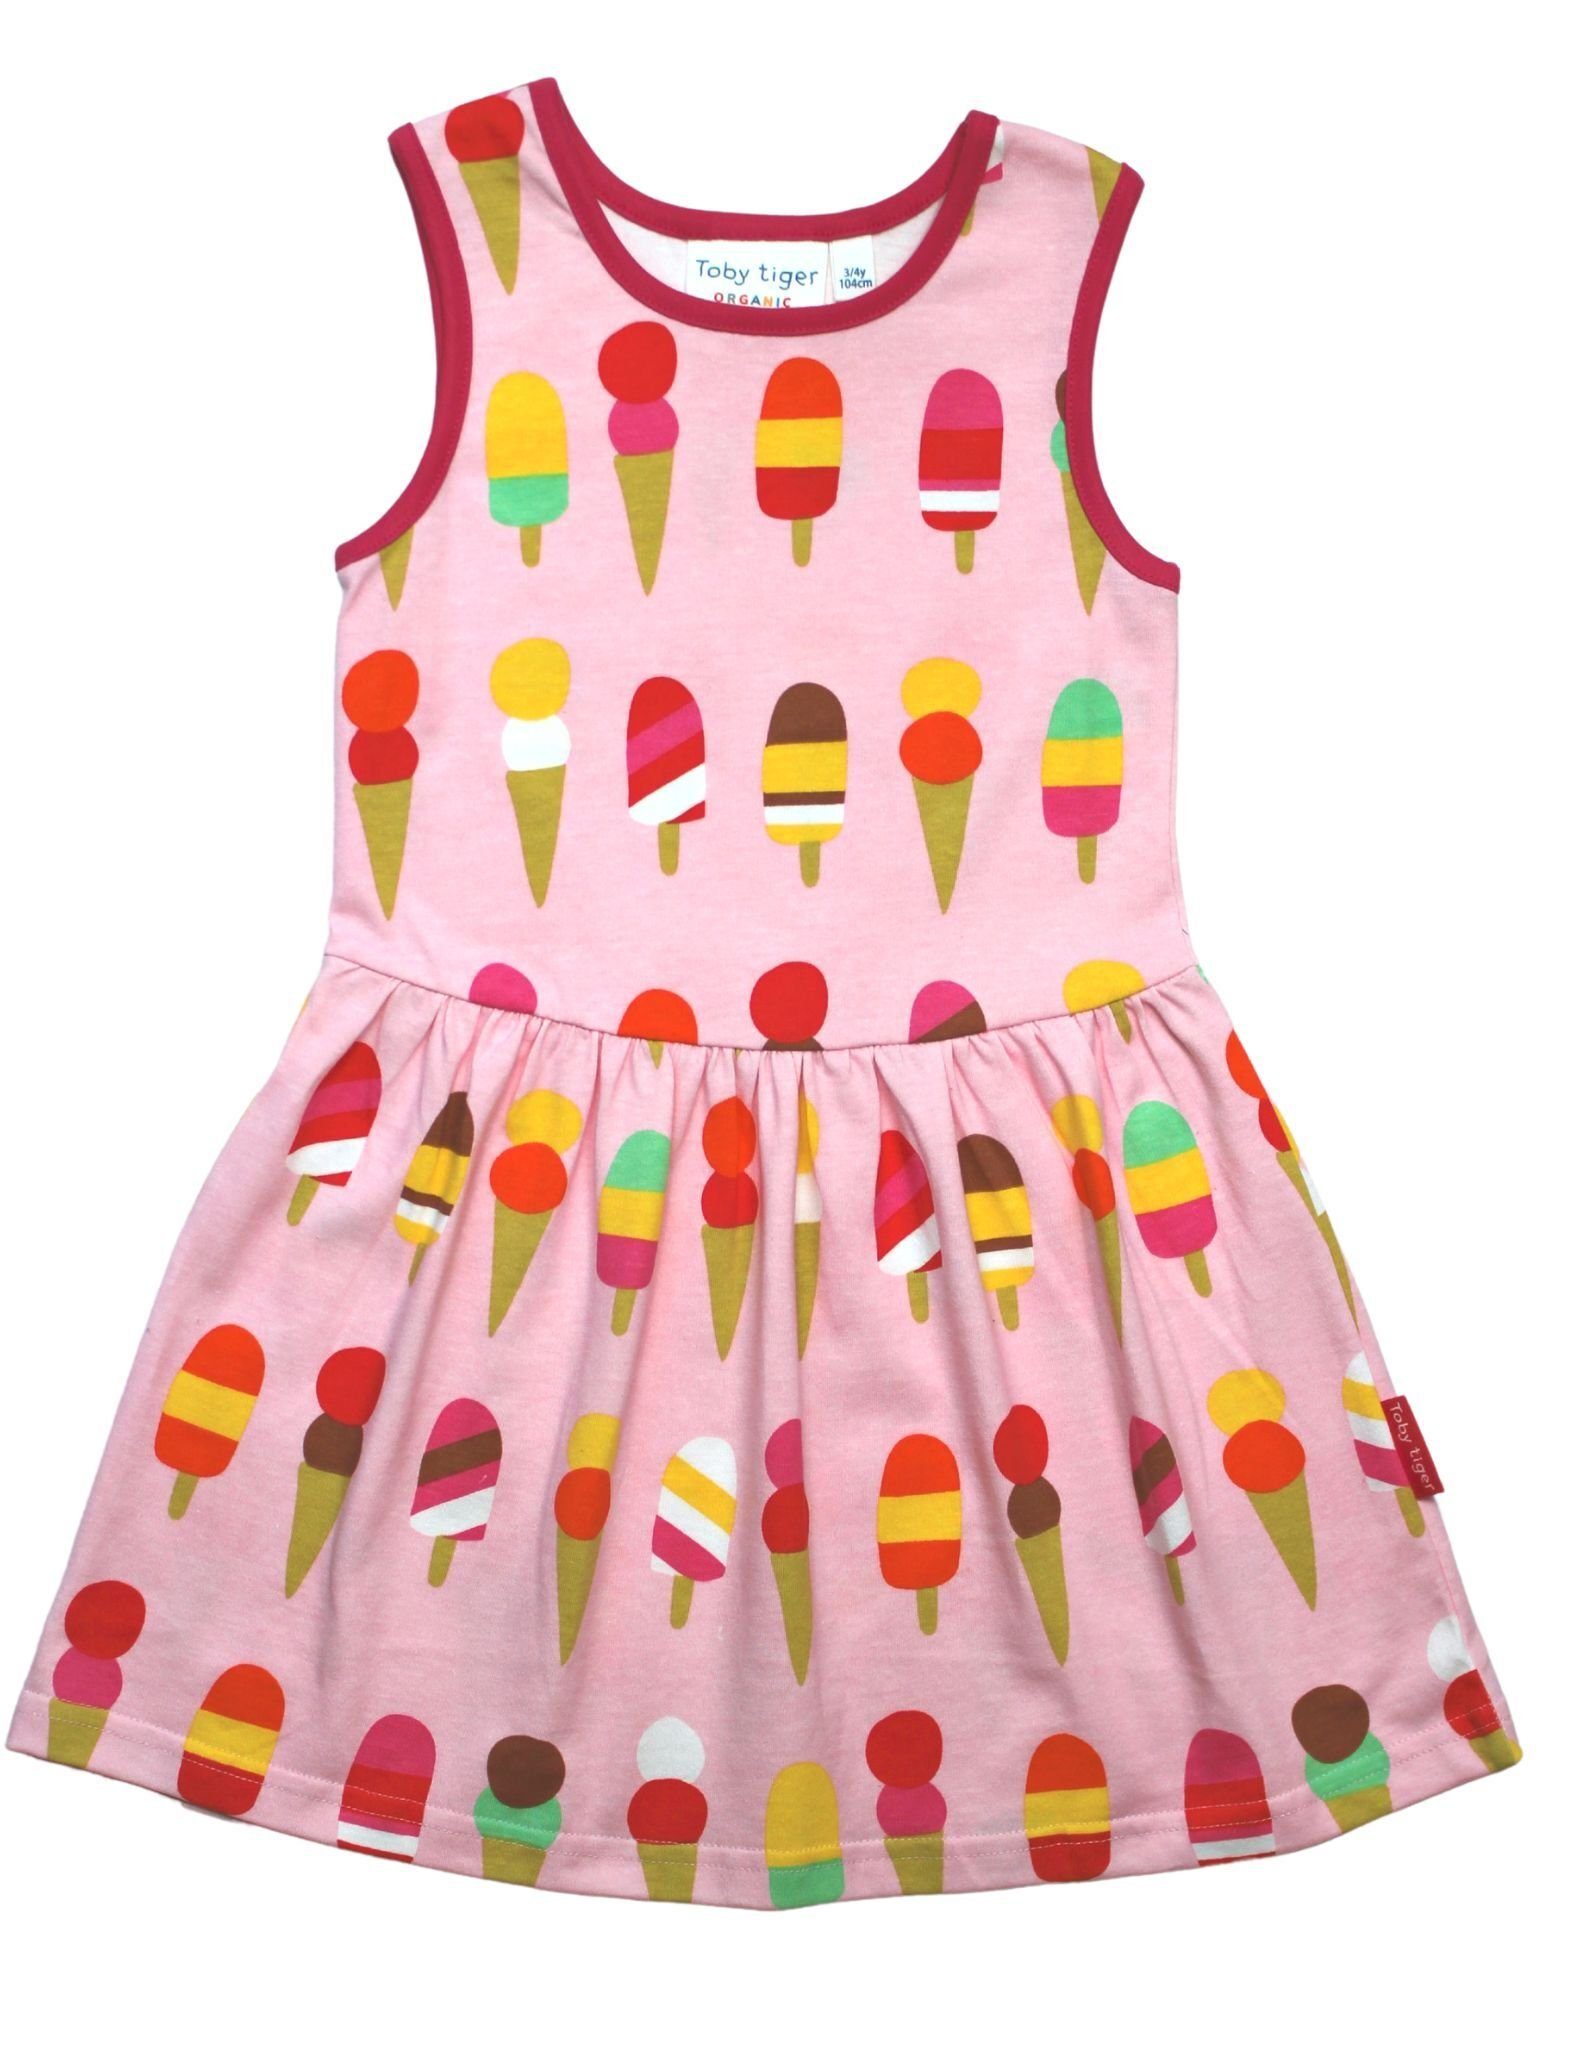 Eiscreme mit Kinder Tiger Toby Print Shirtkleid Kleid